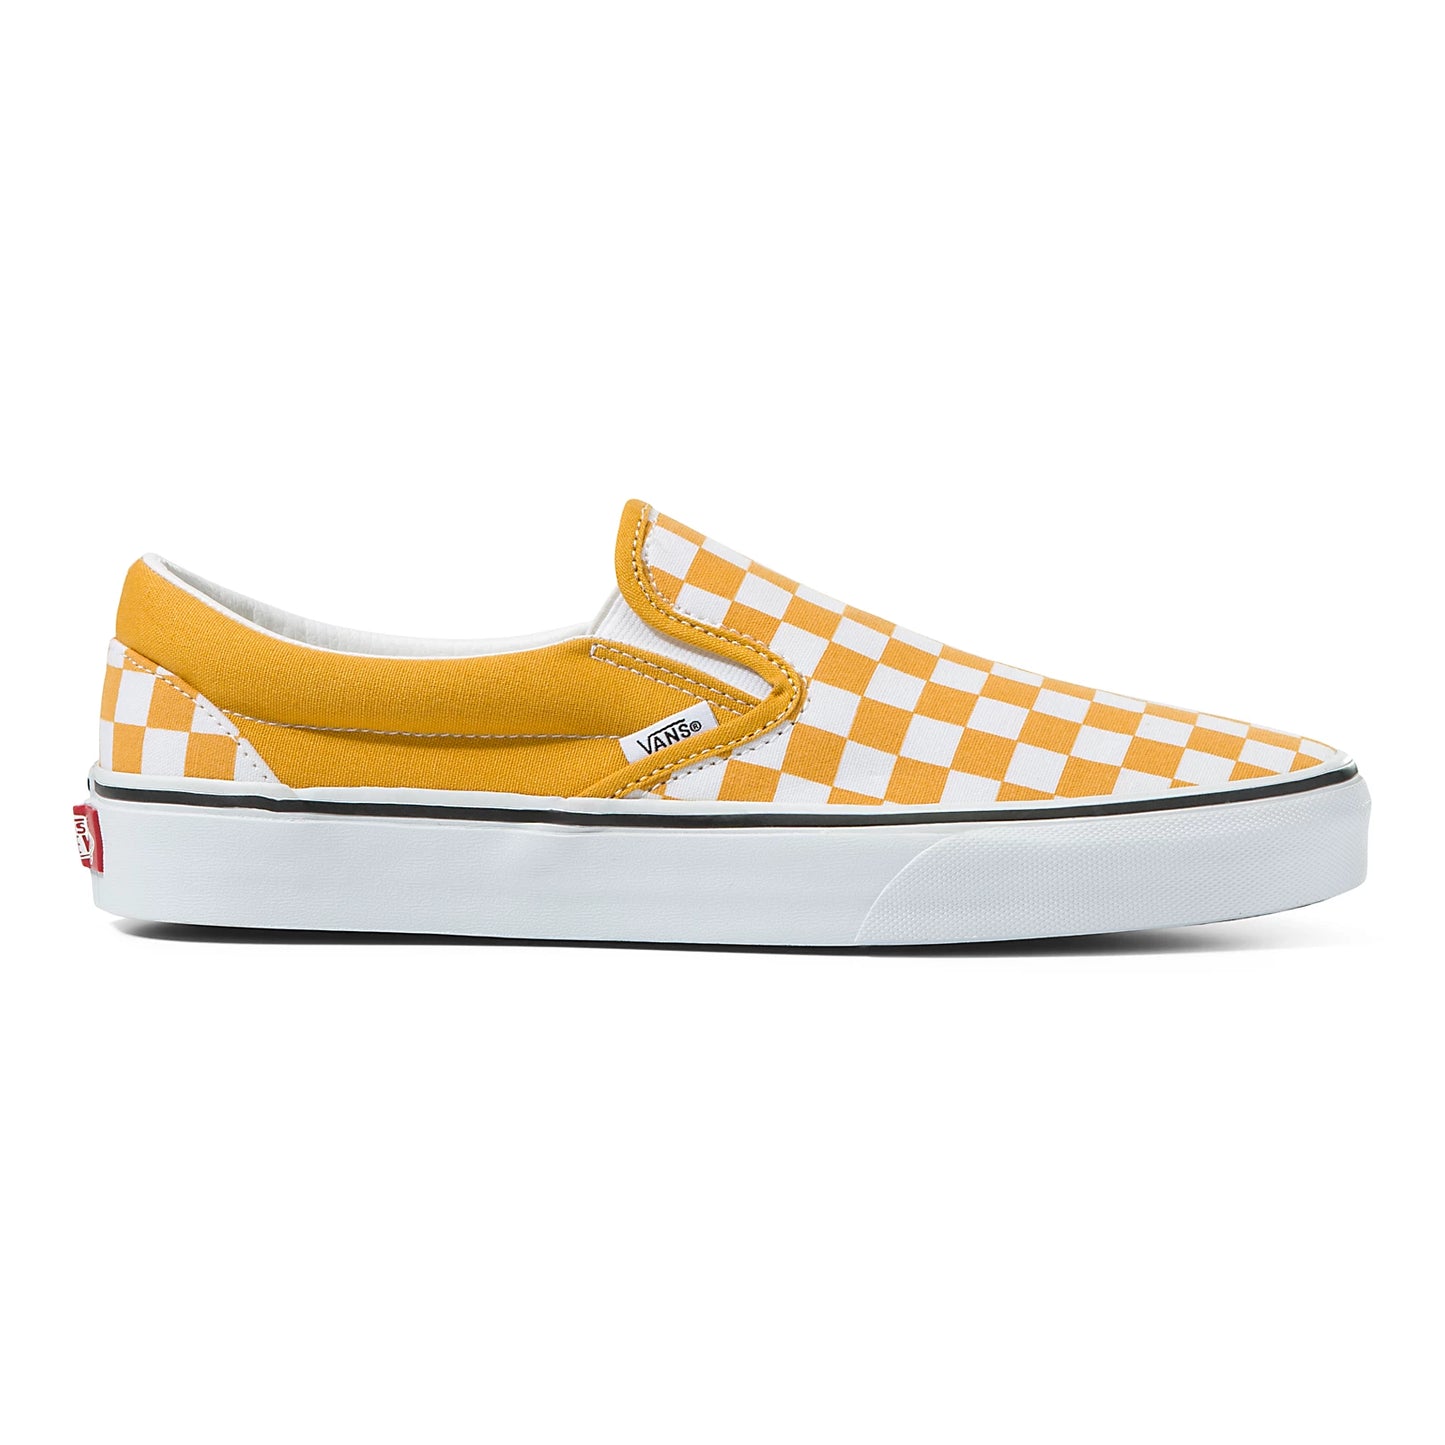 Original Vans Classic Slip On - Theory Checkerboard Golden Yellow